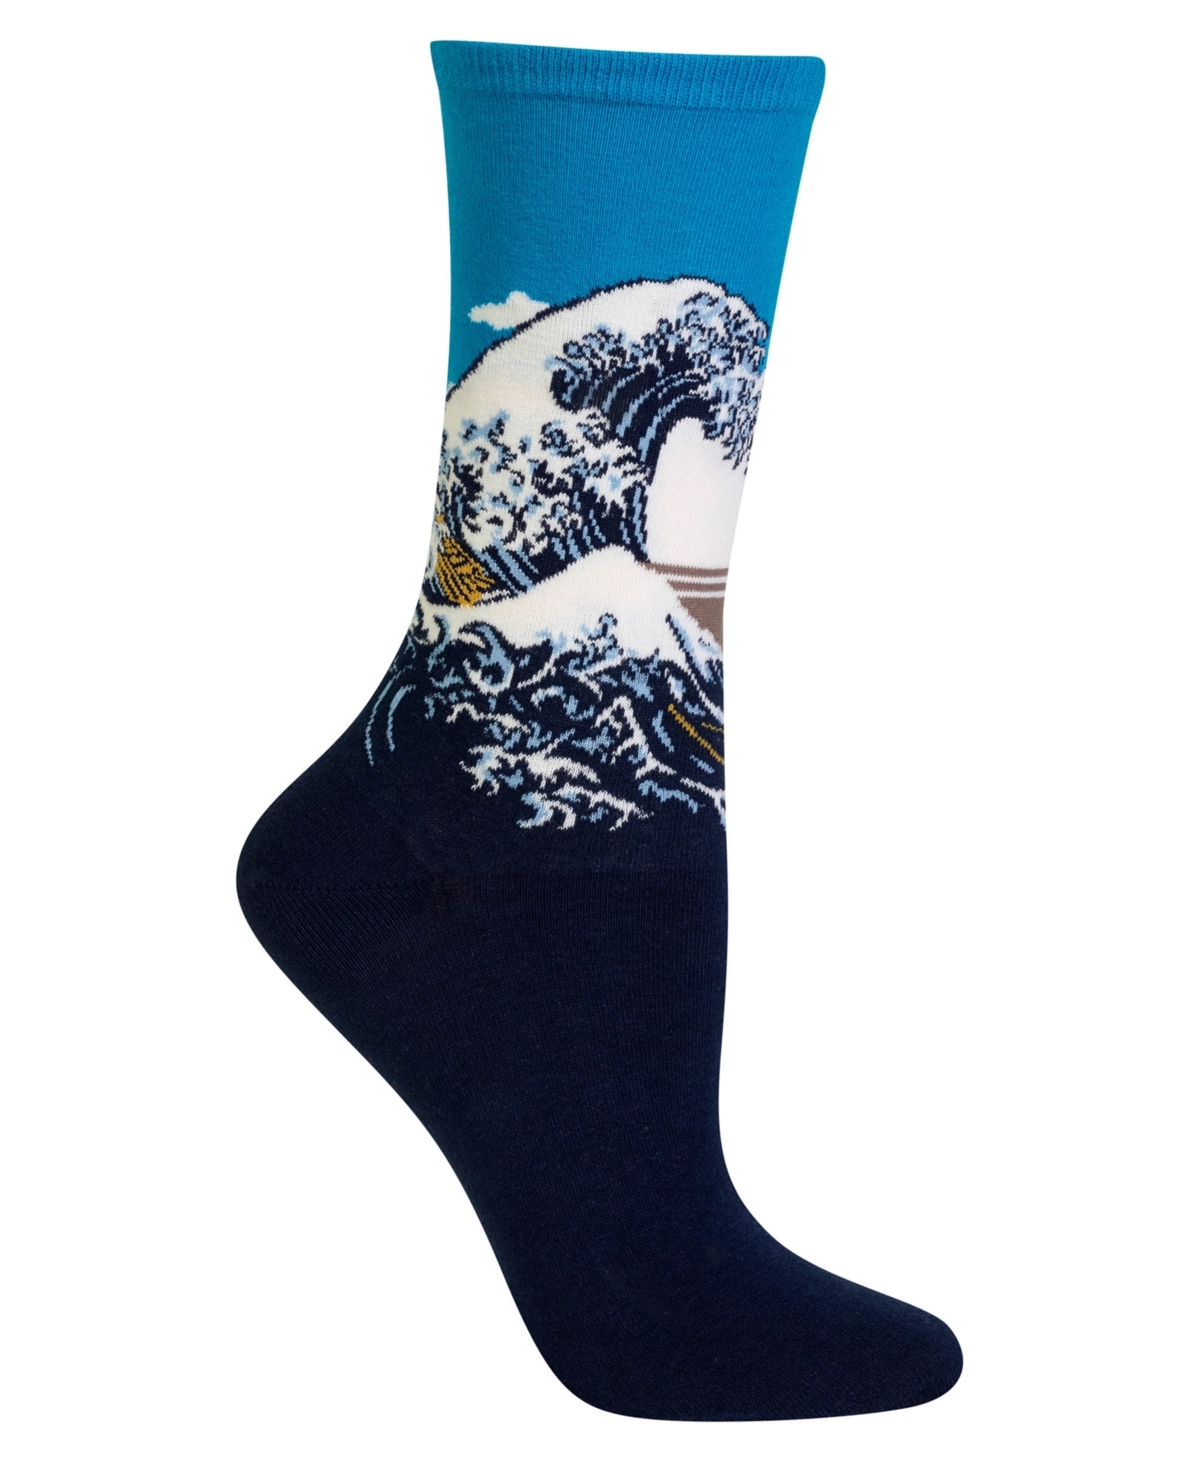 Women's Hokusai's Great Wave Fashion Crew Socks - Marine